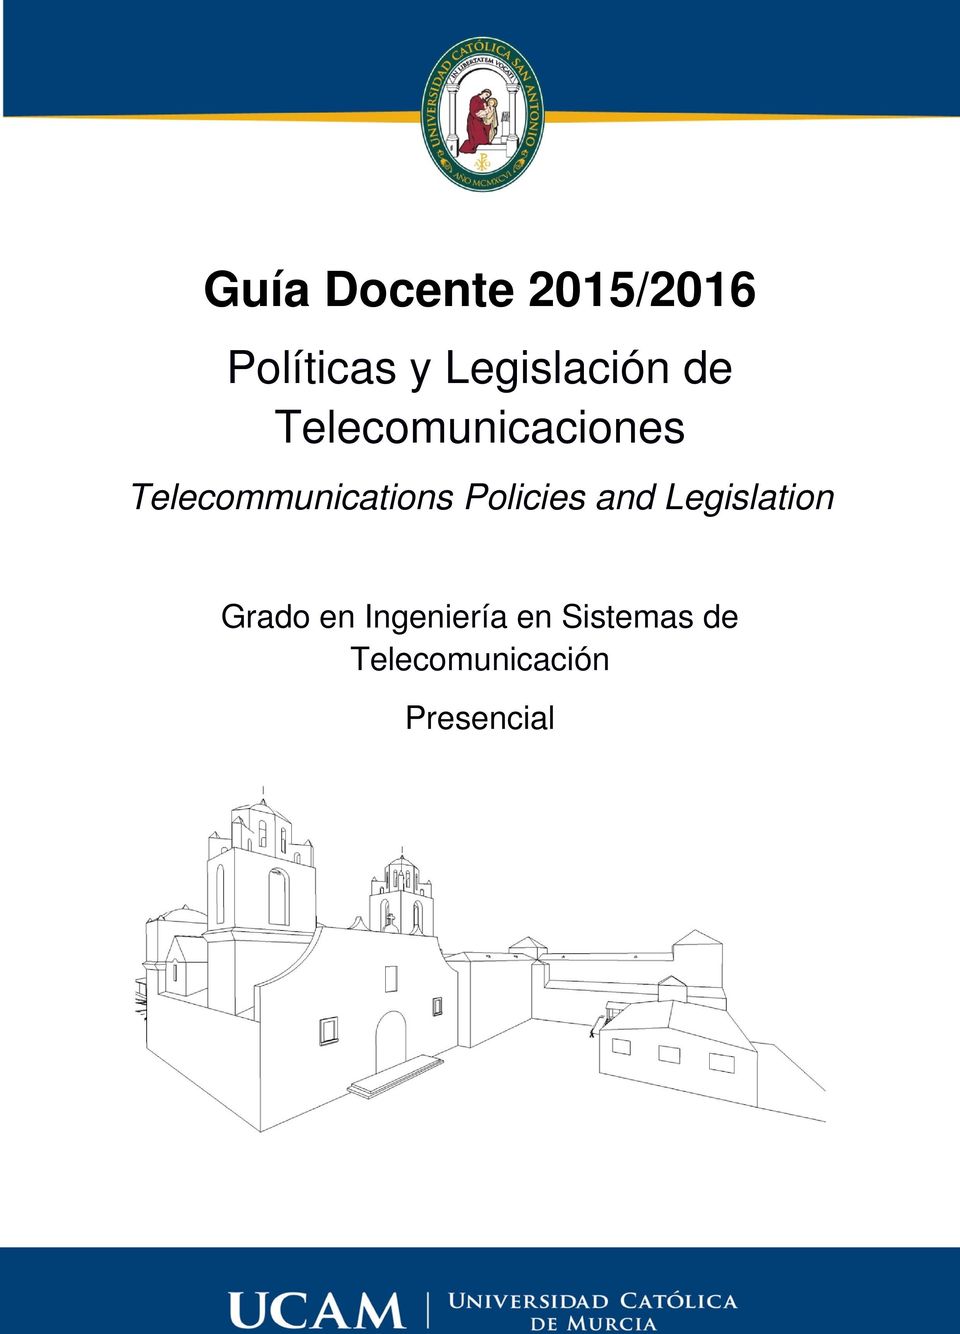 Telecommunications Policies and Legislation